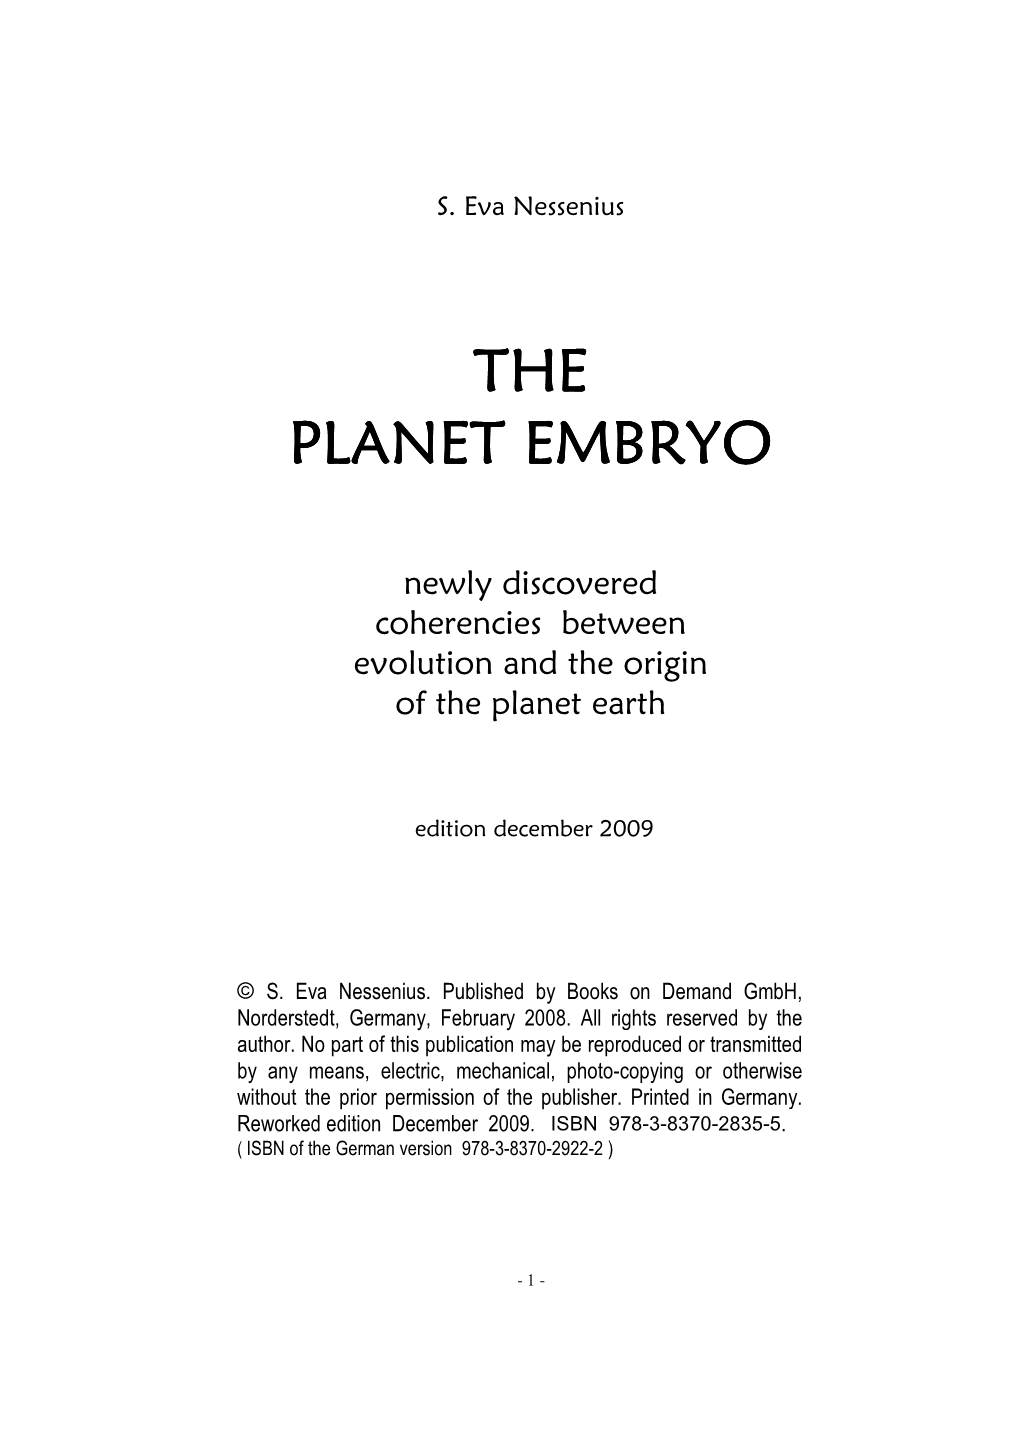 The Planet Embryo